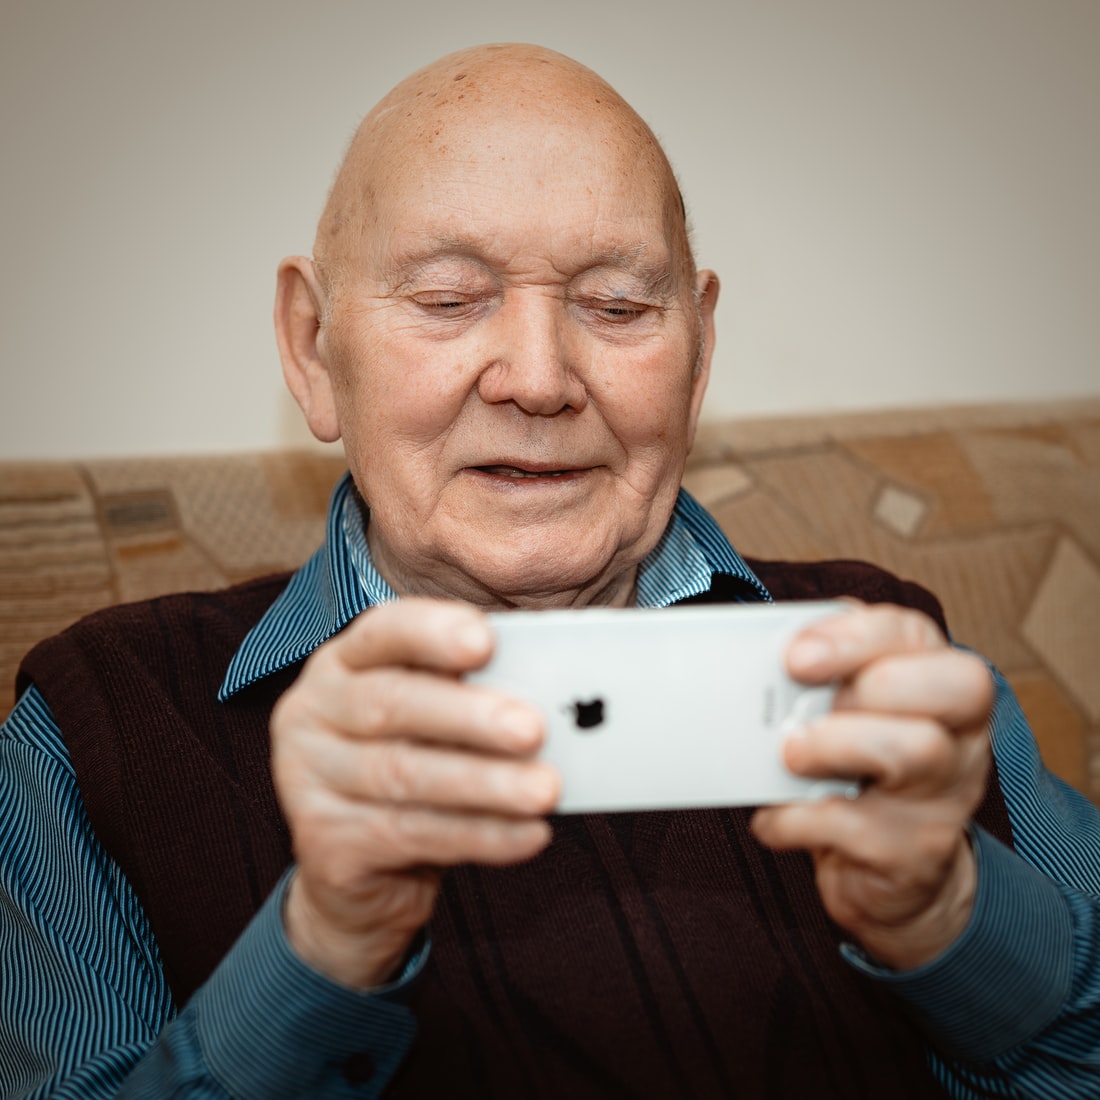 older man on phone